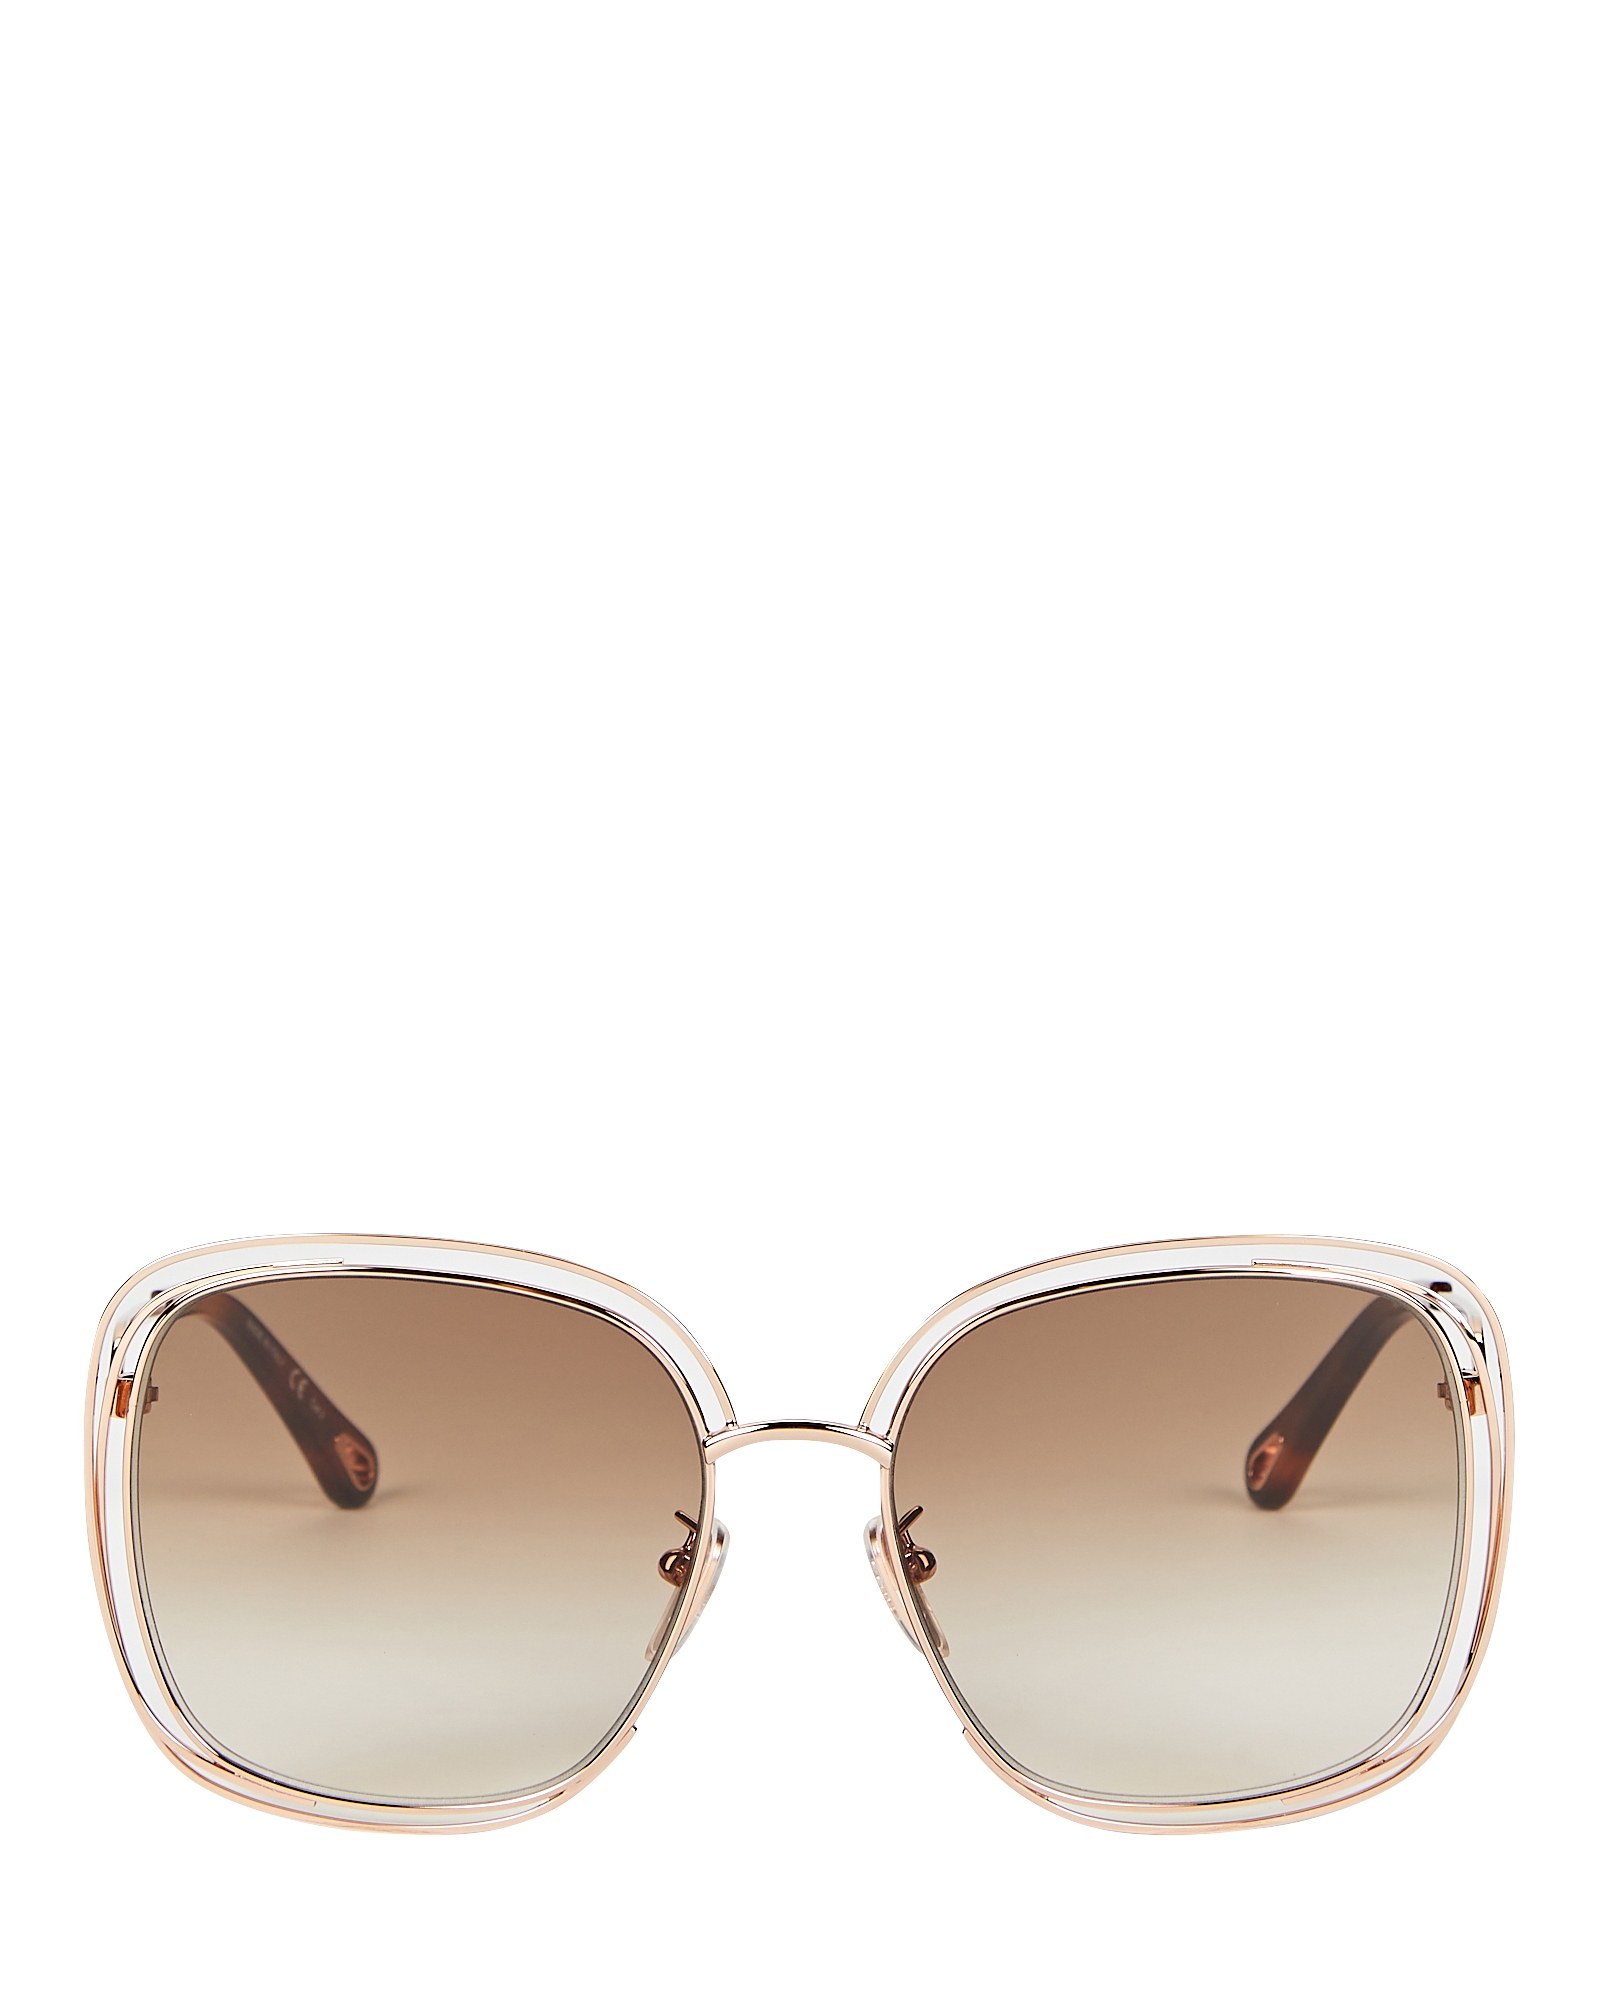 Chloé Carlina Oversized Square Sunglasses | INTERMIX®